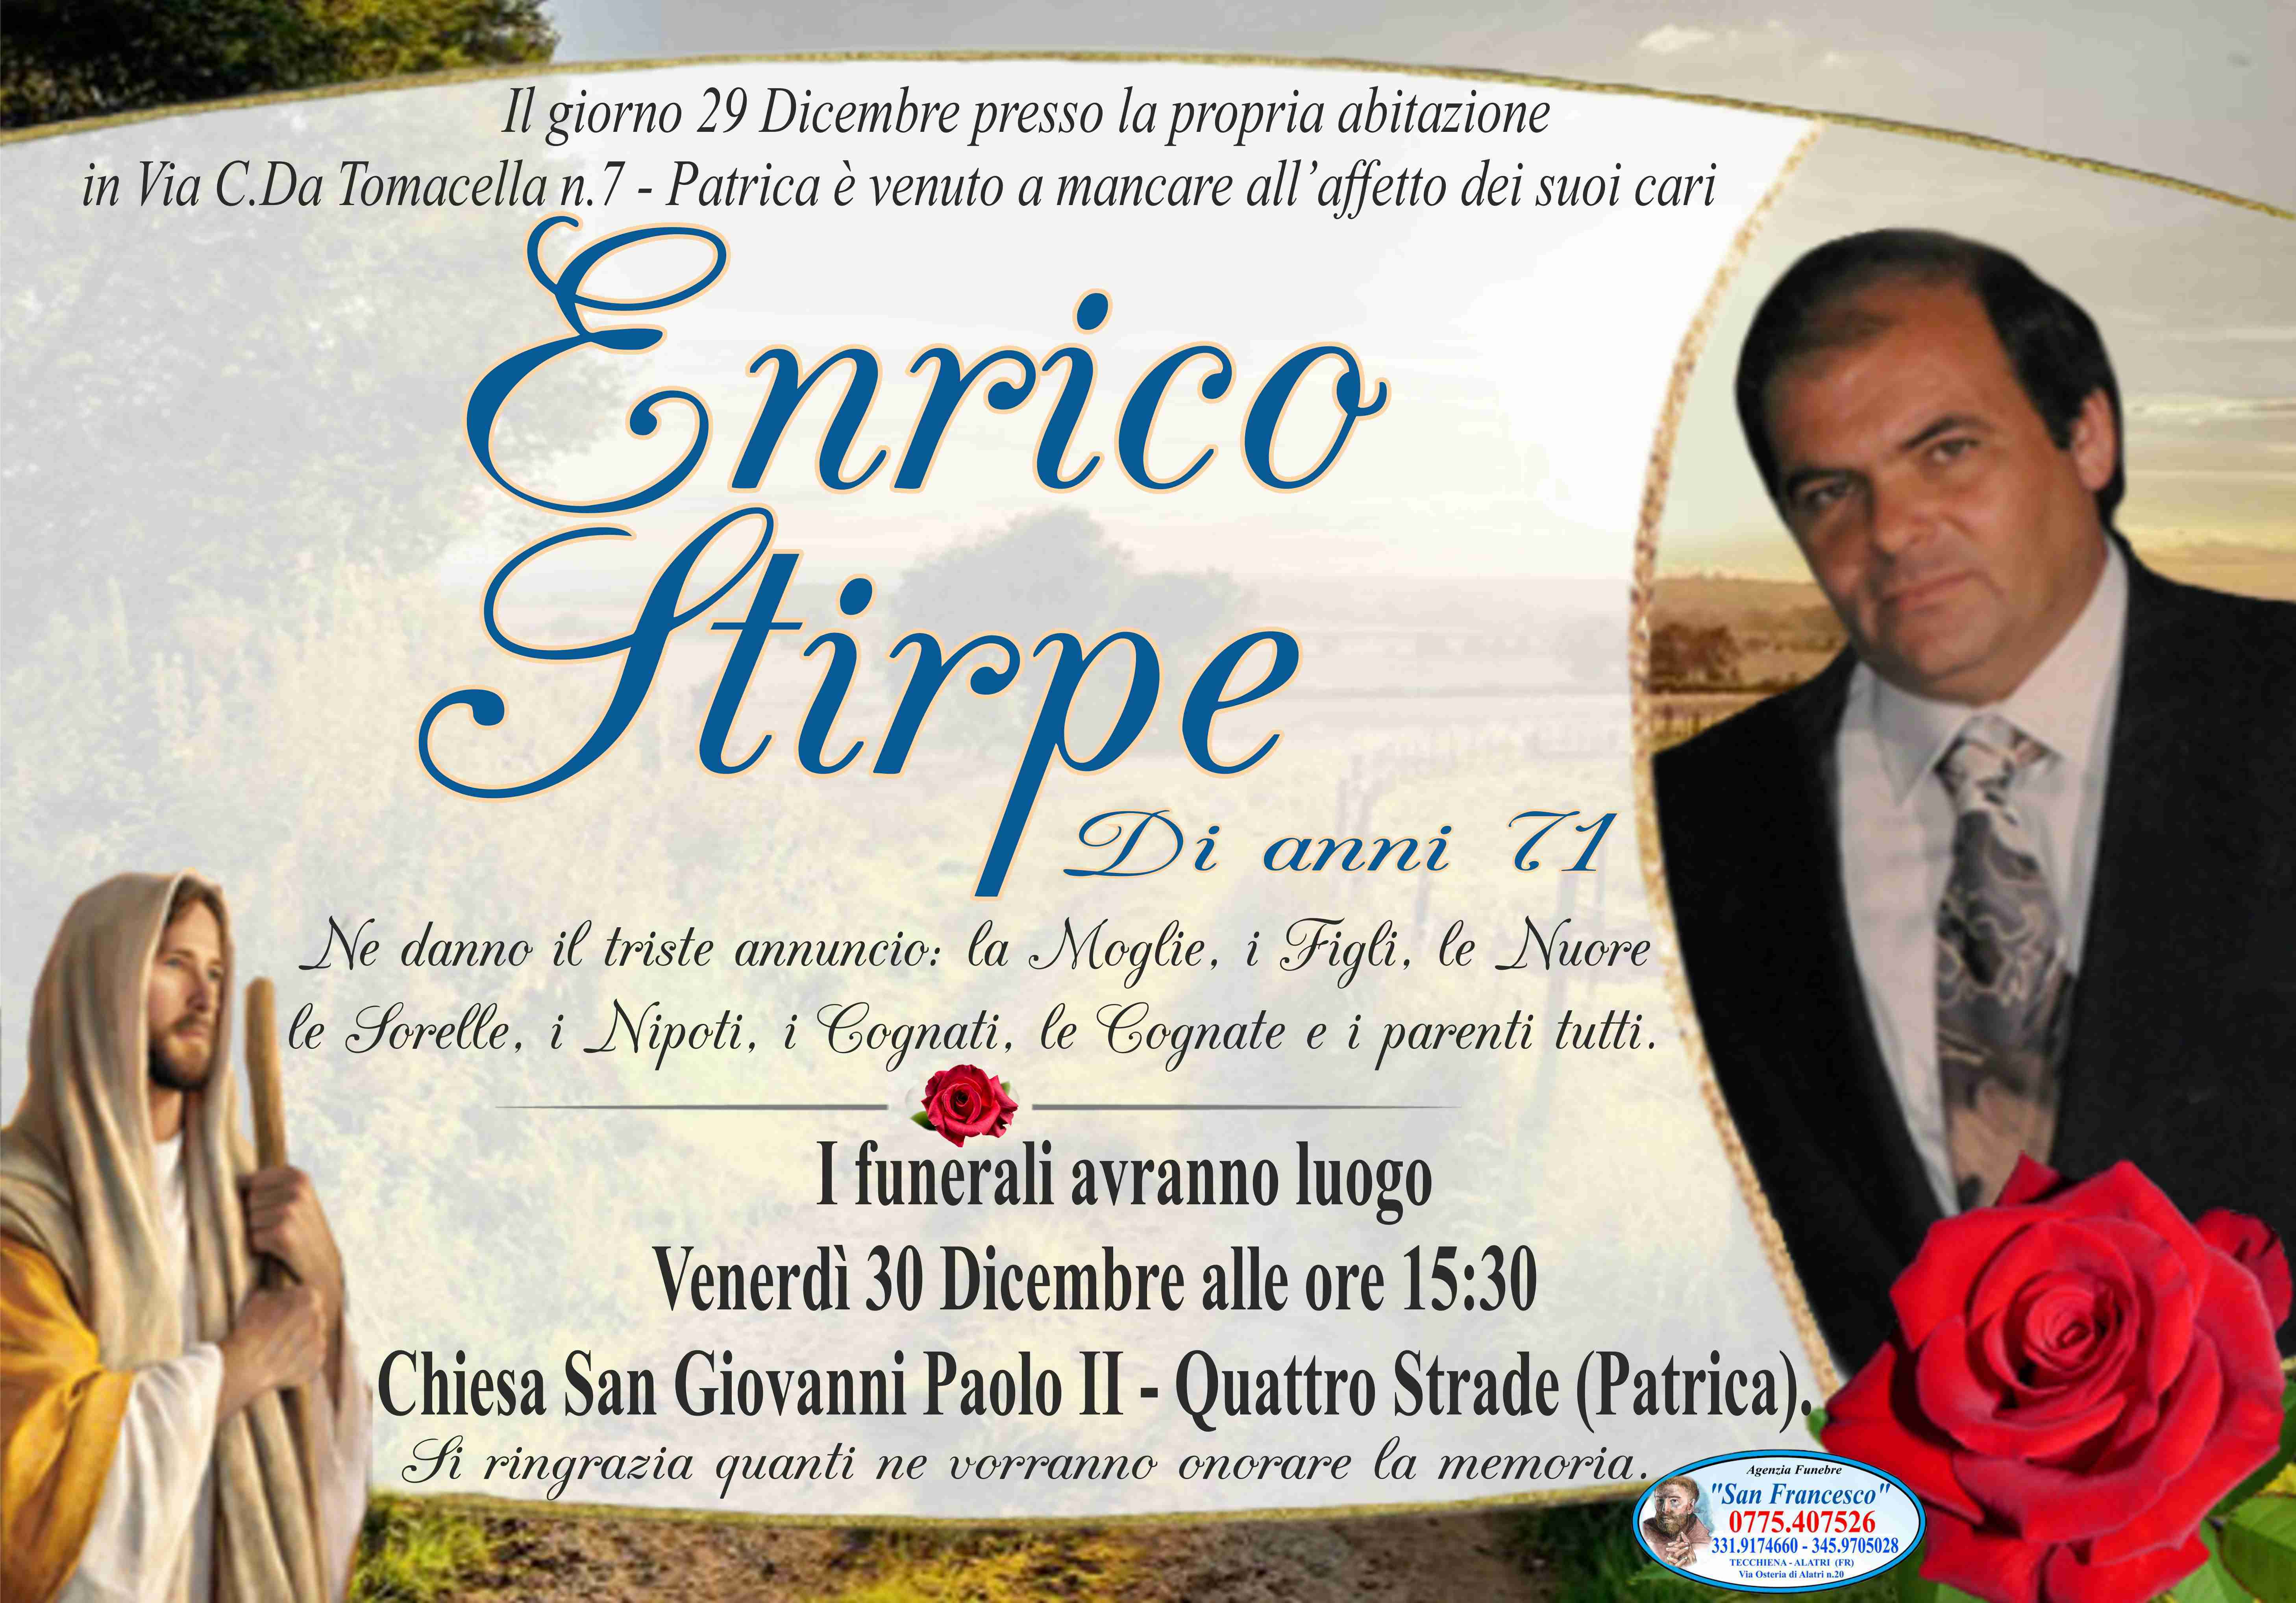 Enrico Stirpe